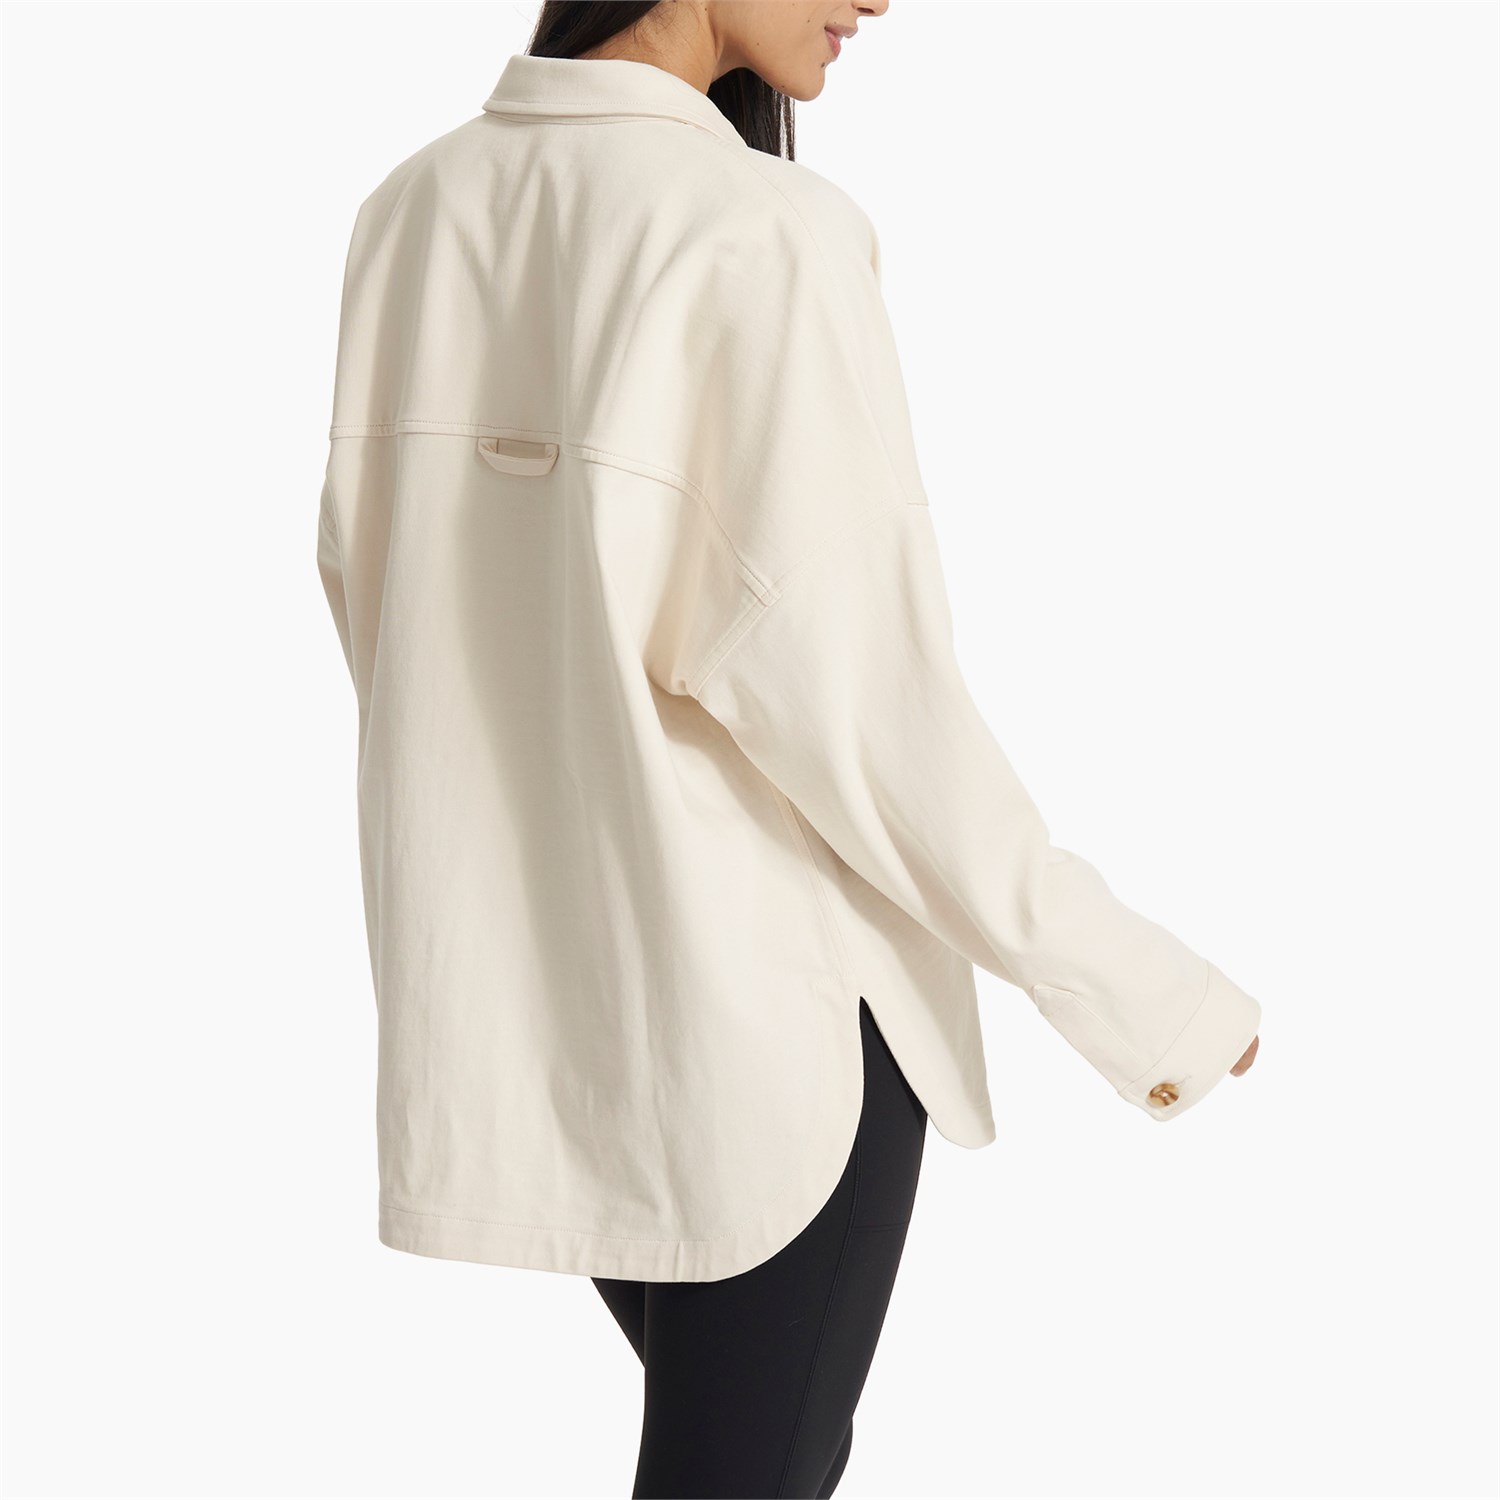 Ainangua Women's Casual Wool Blend Long Plaid Shirt Jacket Button Down  Pocketed Shirt Shacket(02 Grey,XS) at Amazon Women's Clothing store